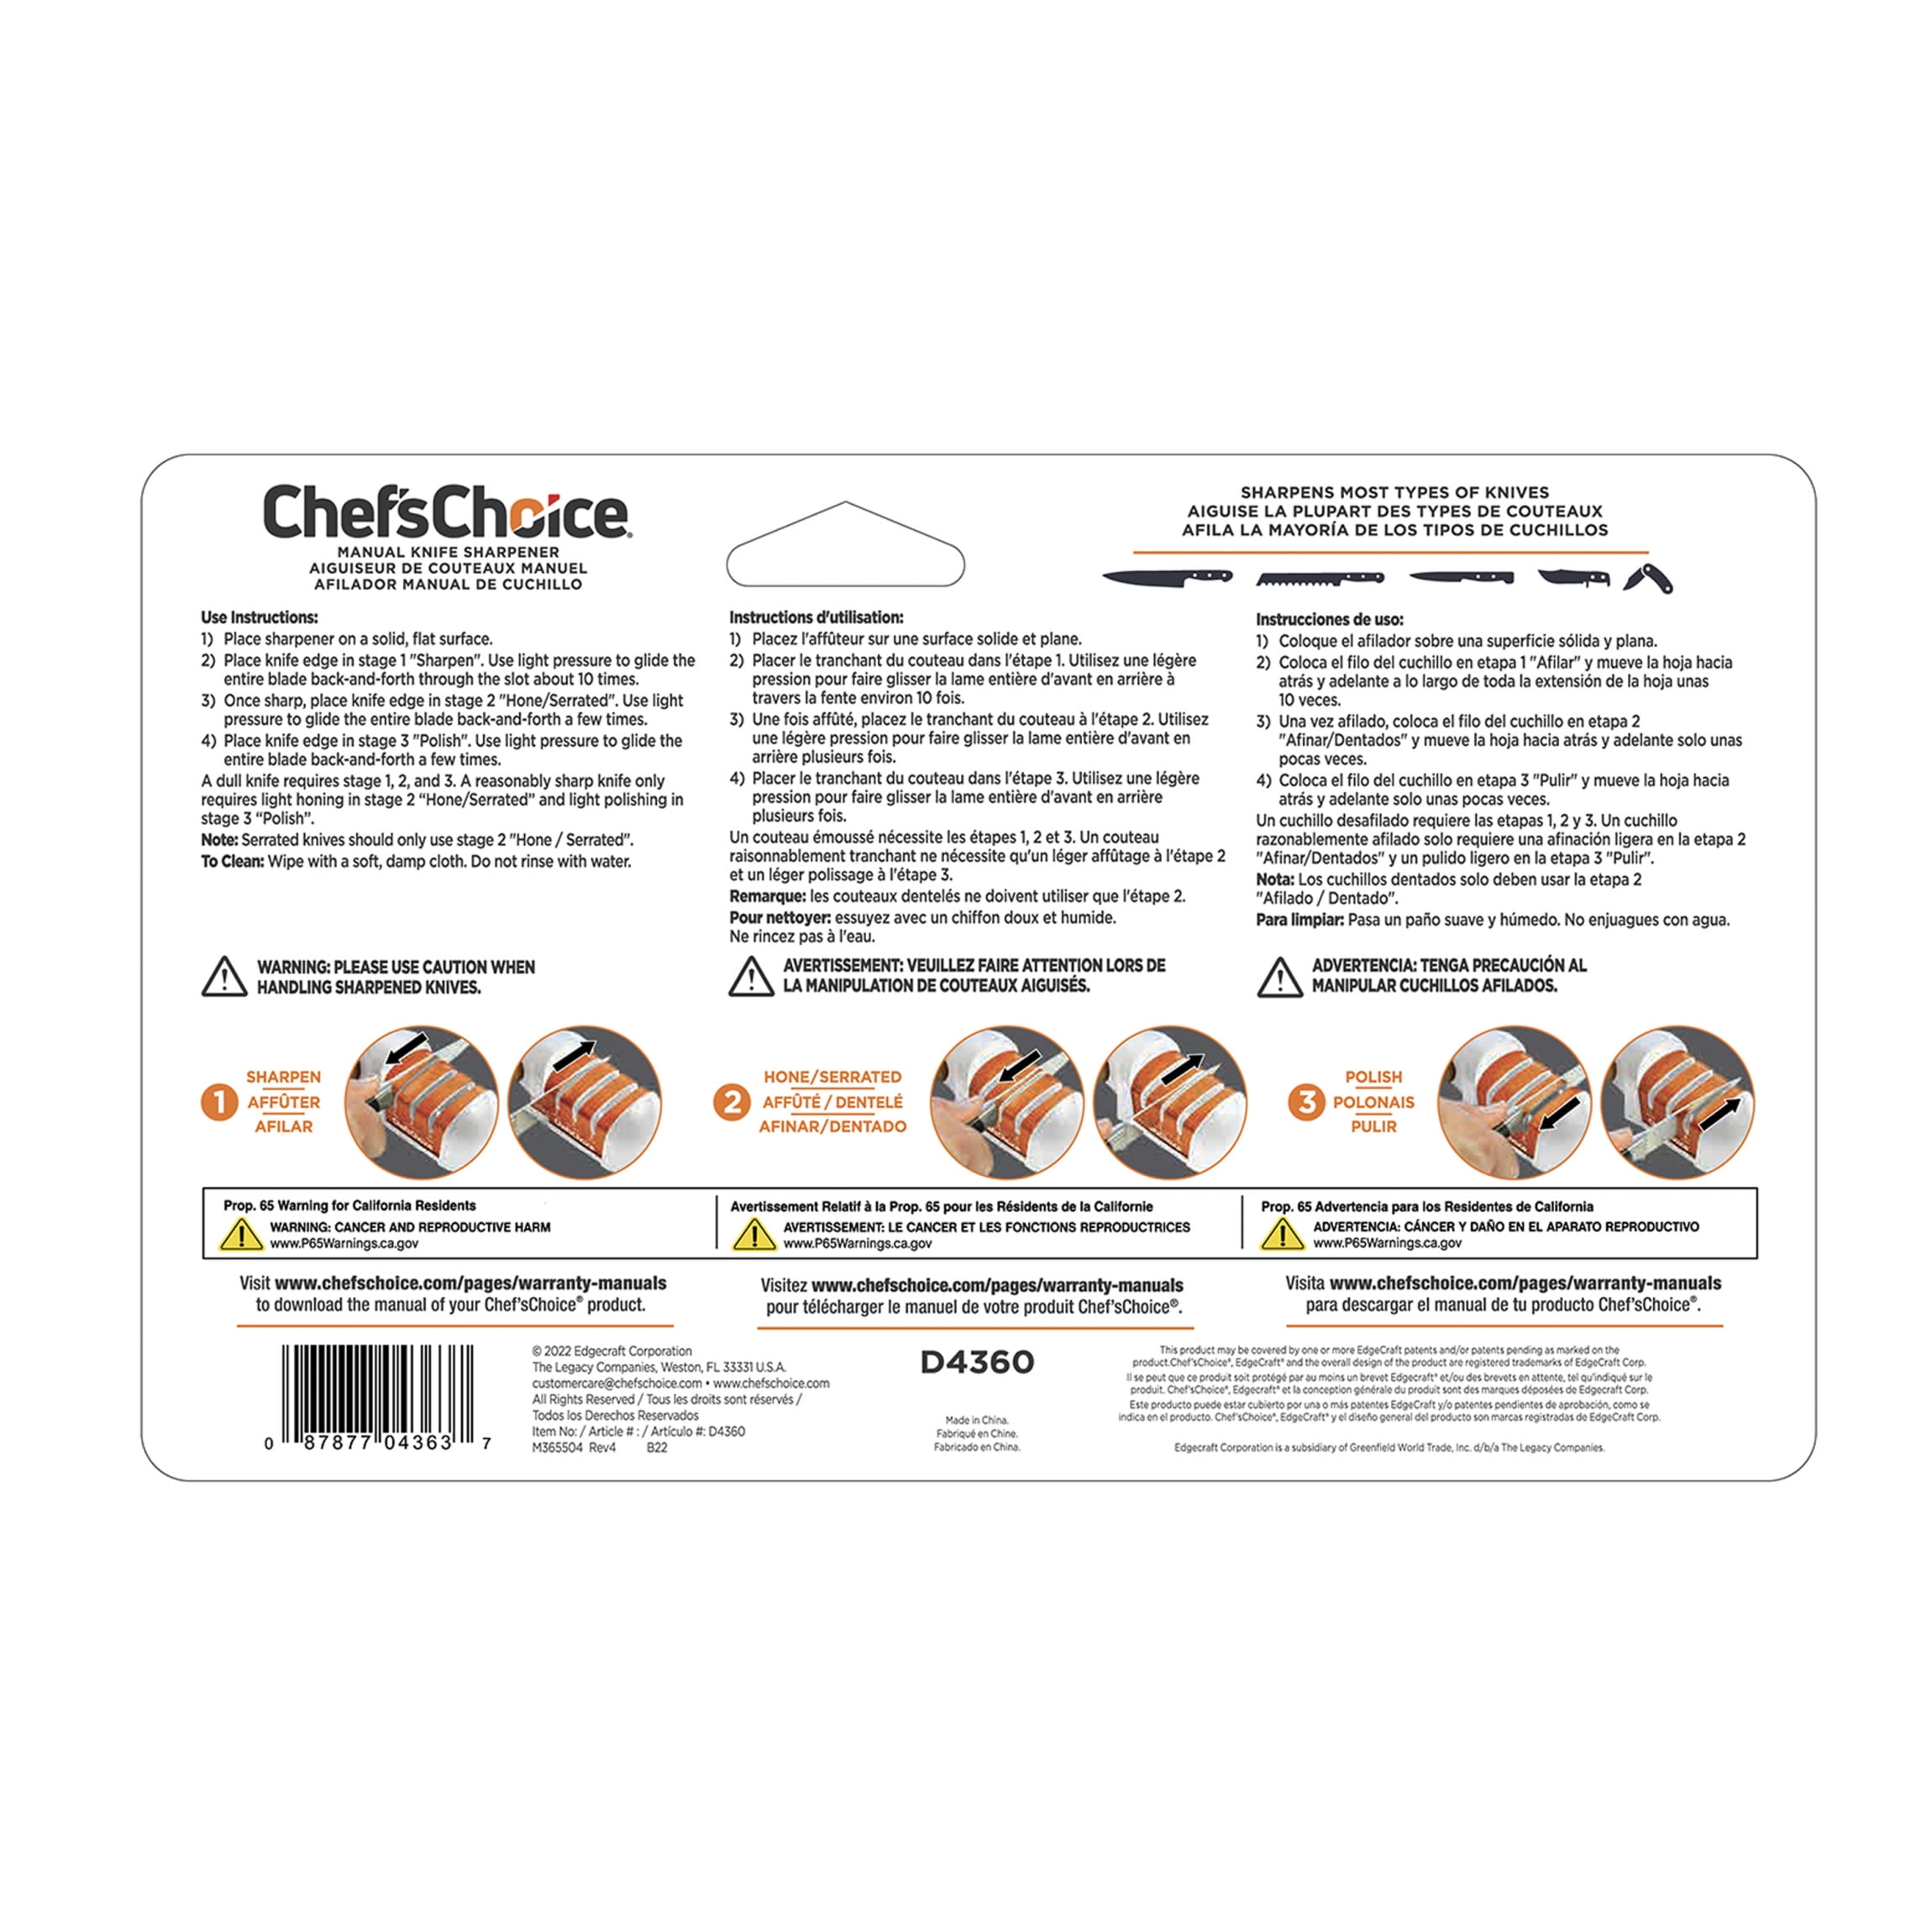 Chefs Choice Pronto Pro Manual Knife Sharpener 3D Model $39 - .3ds .blend  .c4d .fbx .max .ma .lxo .obj .usdz .unitypackage .upk .gltf - Free3D